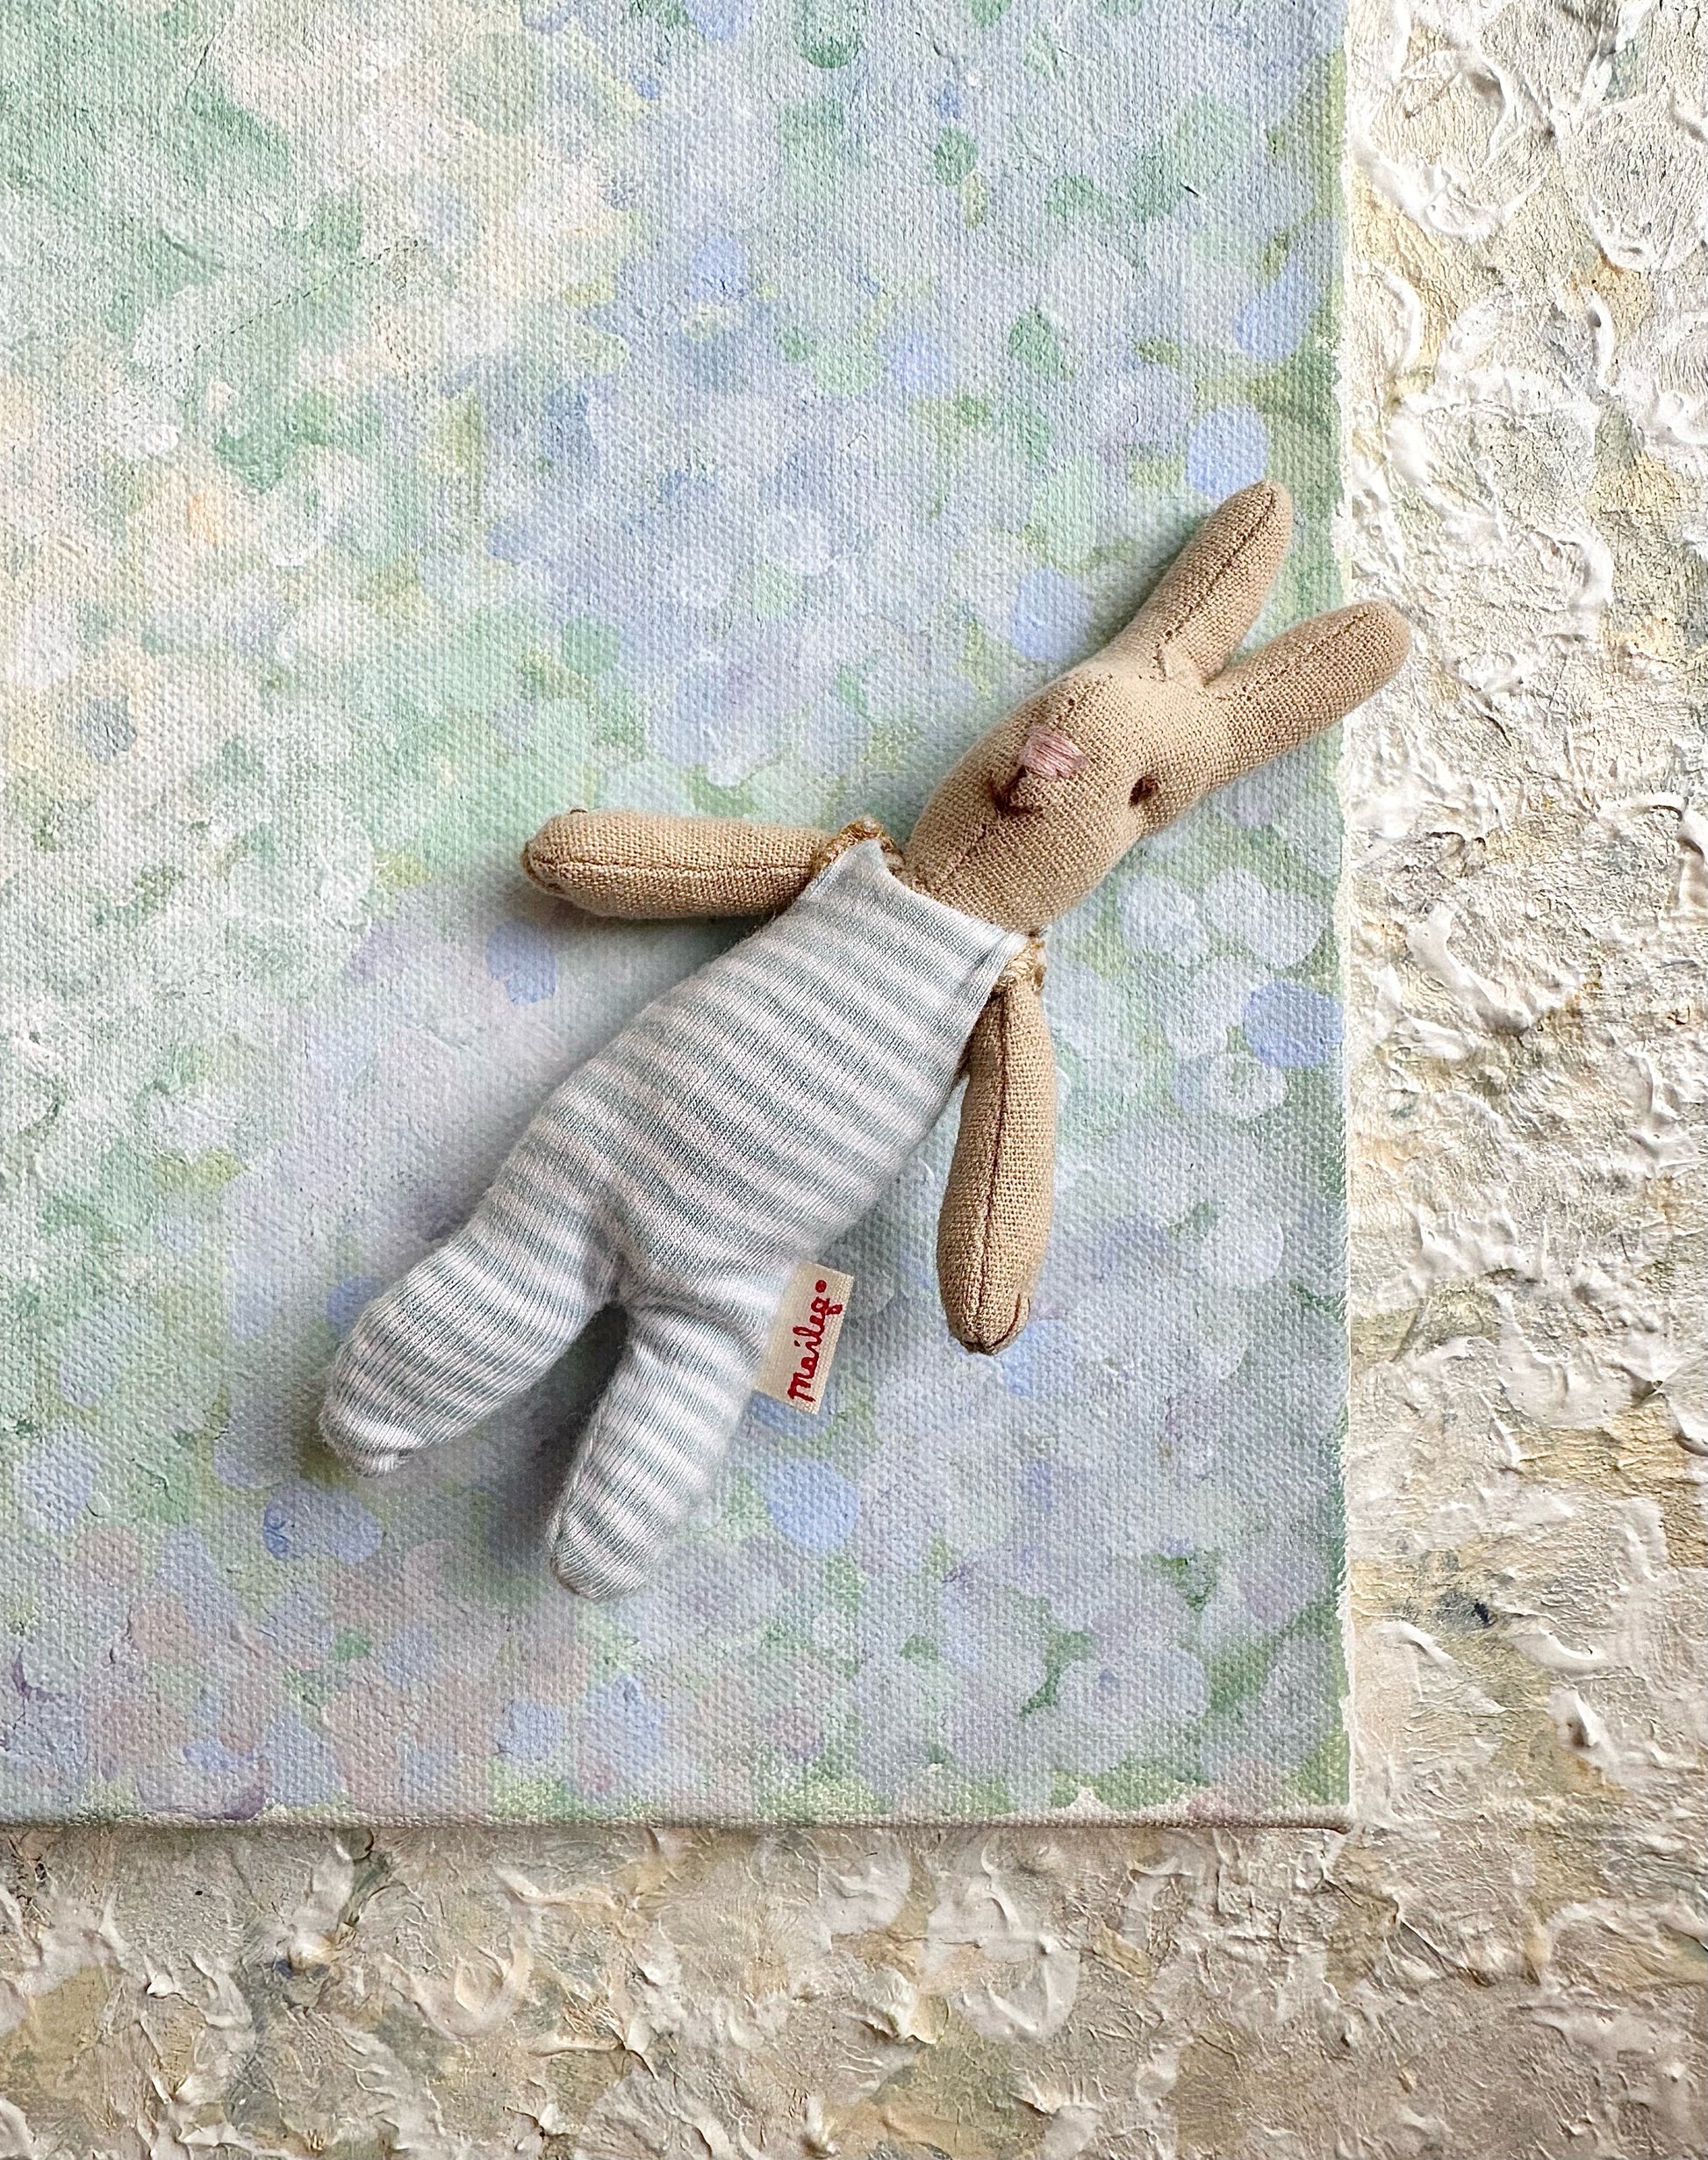 Newborn Rabbit in Nightsuit - 2012